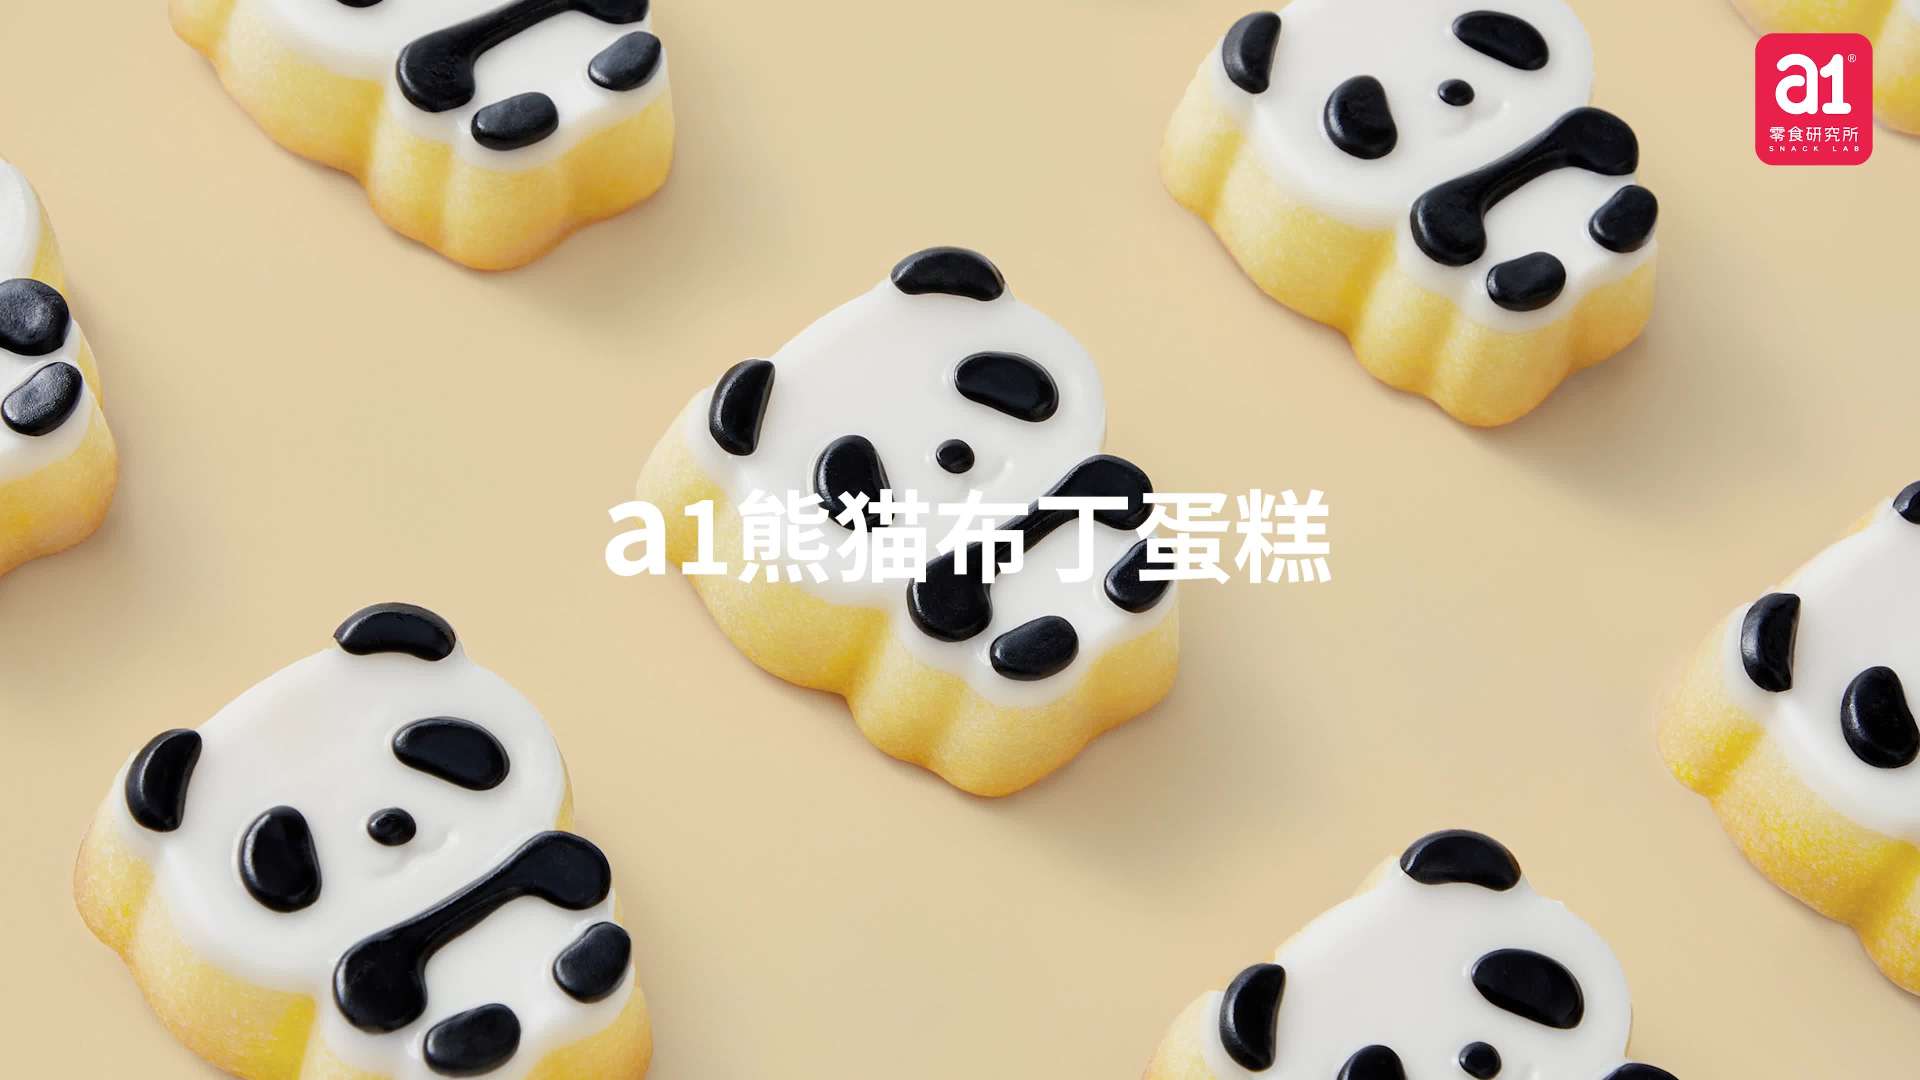 A1零食-熊猫布丁